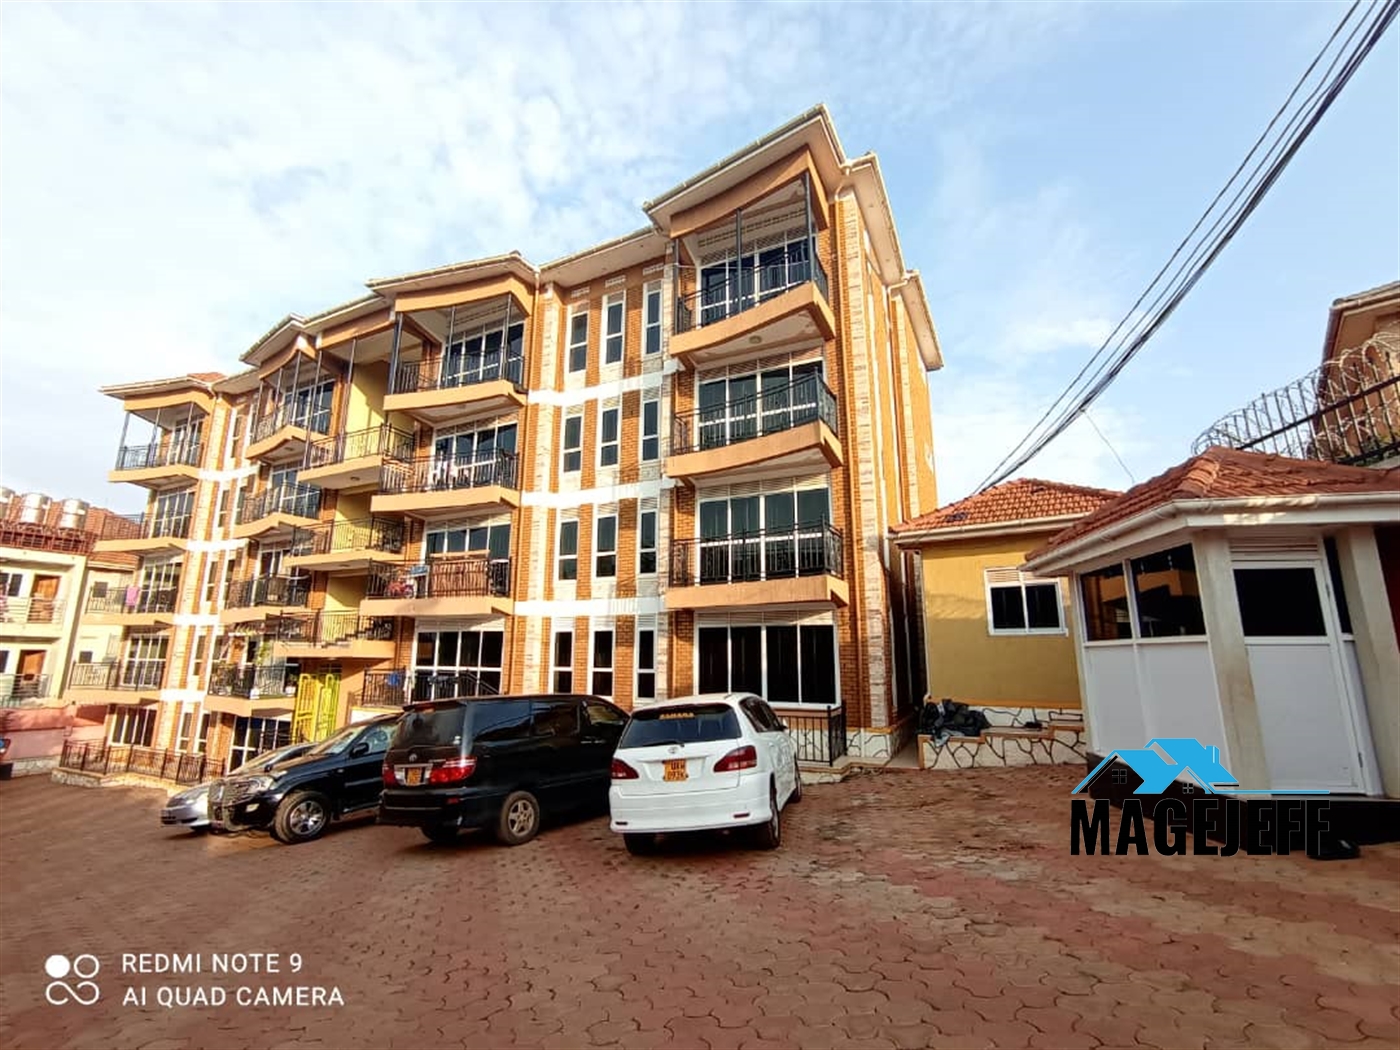 Apartment block for sale in Munyonyo Kampala